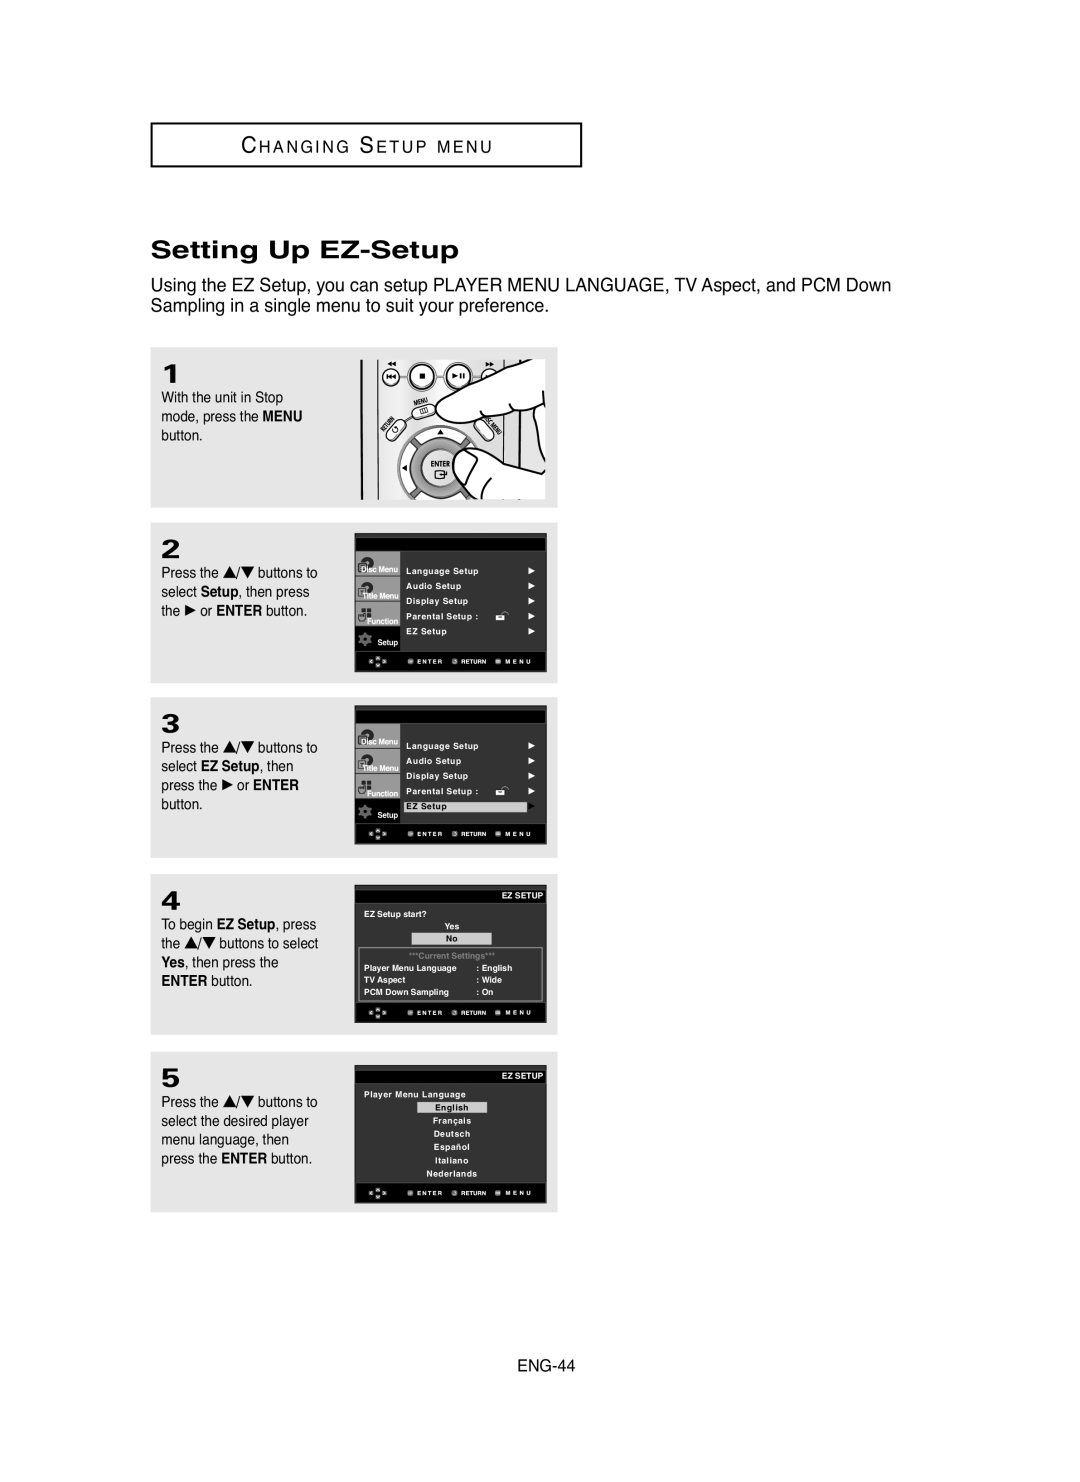 Samsung DVD-HD755 manual Setting Up EZ-Setup, Ch A N G I N G S E T U P M E N U, ENG-44 